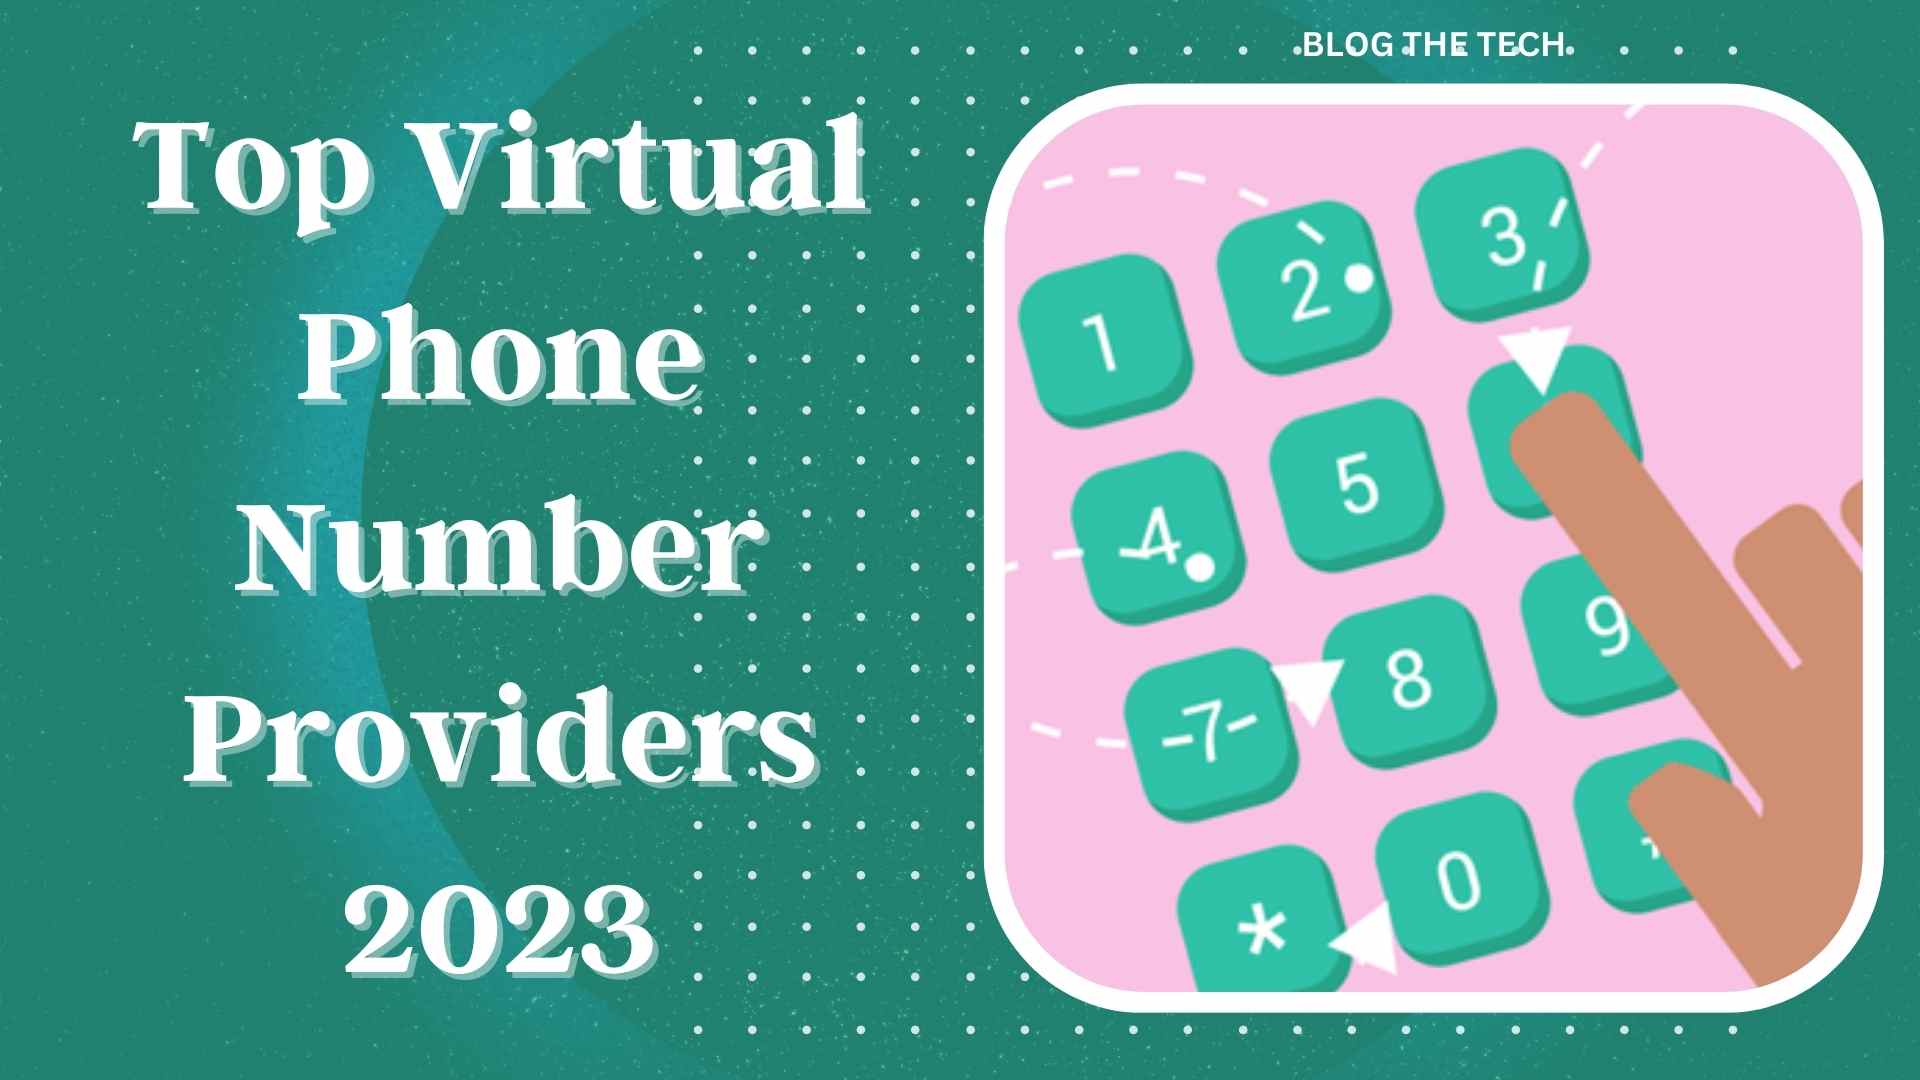 5 Top Virtual Phone Number Providers 2023